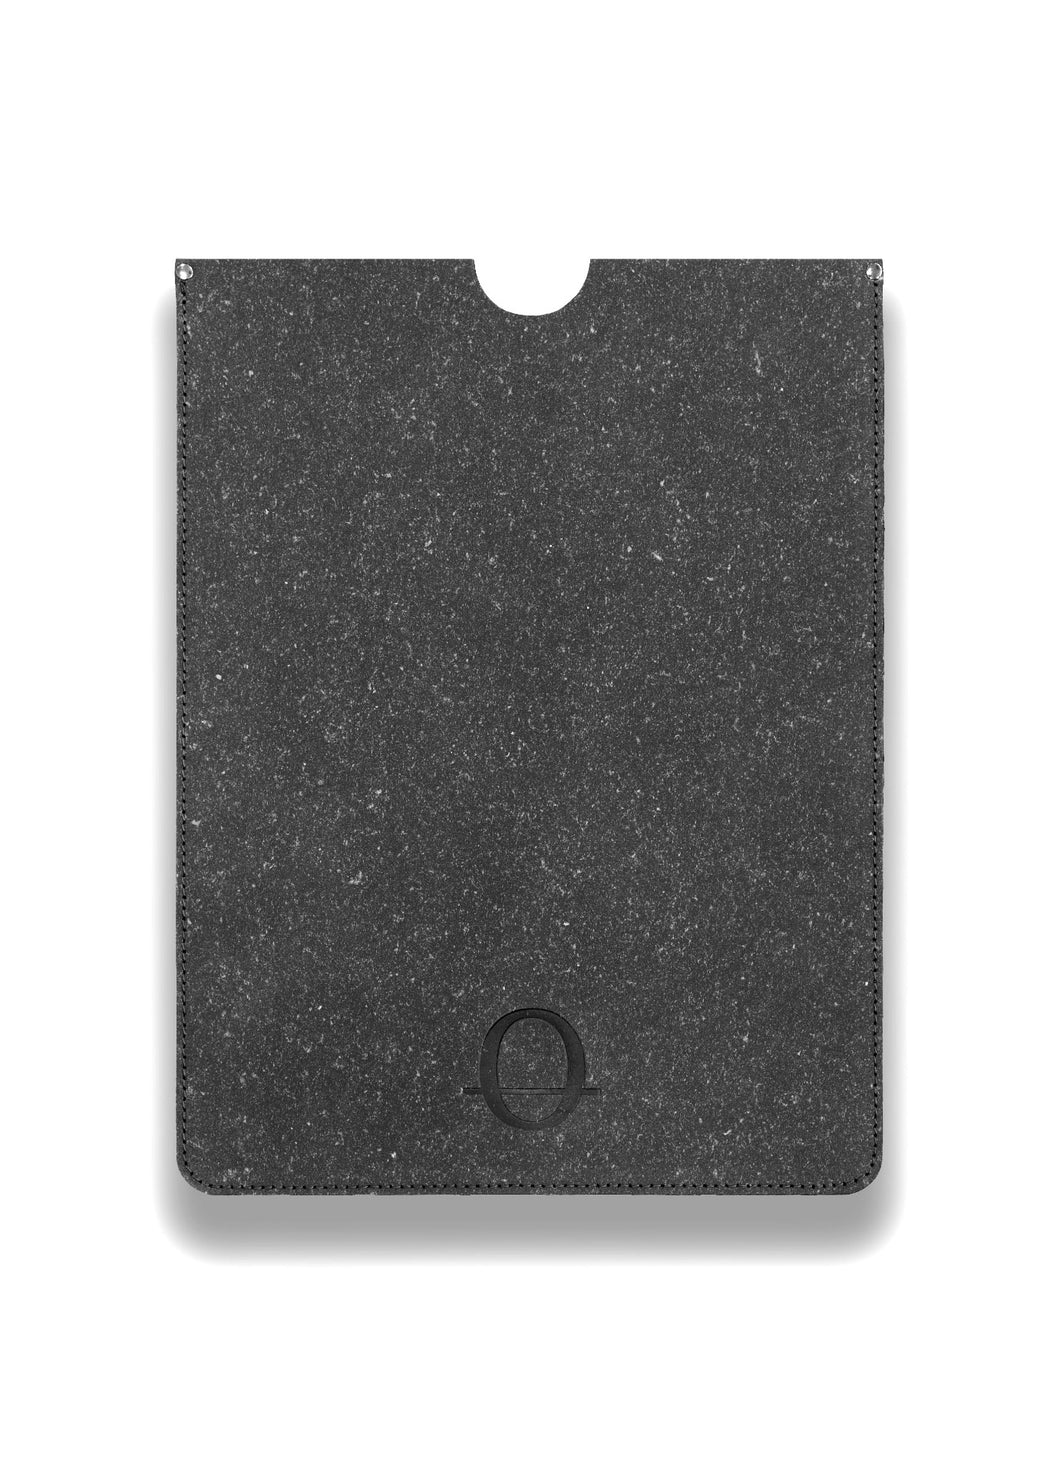 Poplar grey recycled leather 13 inch laptop sleeve